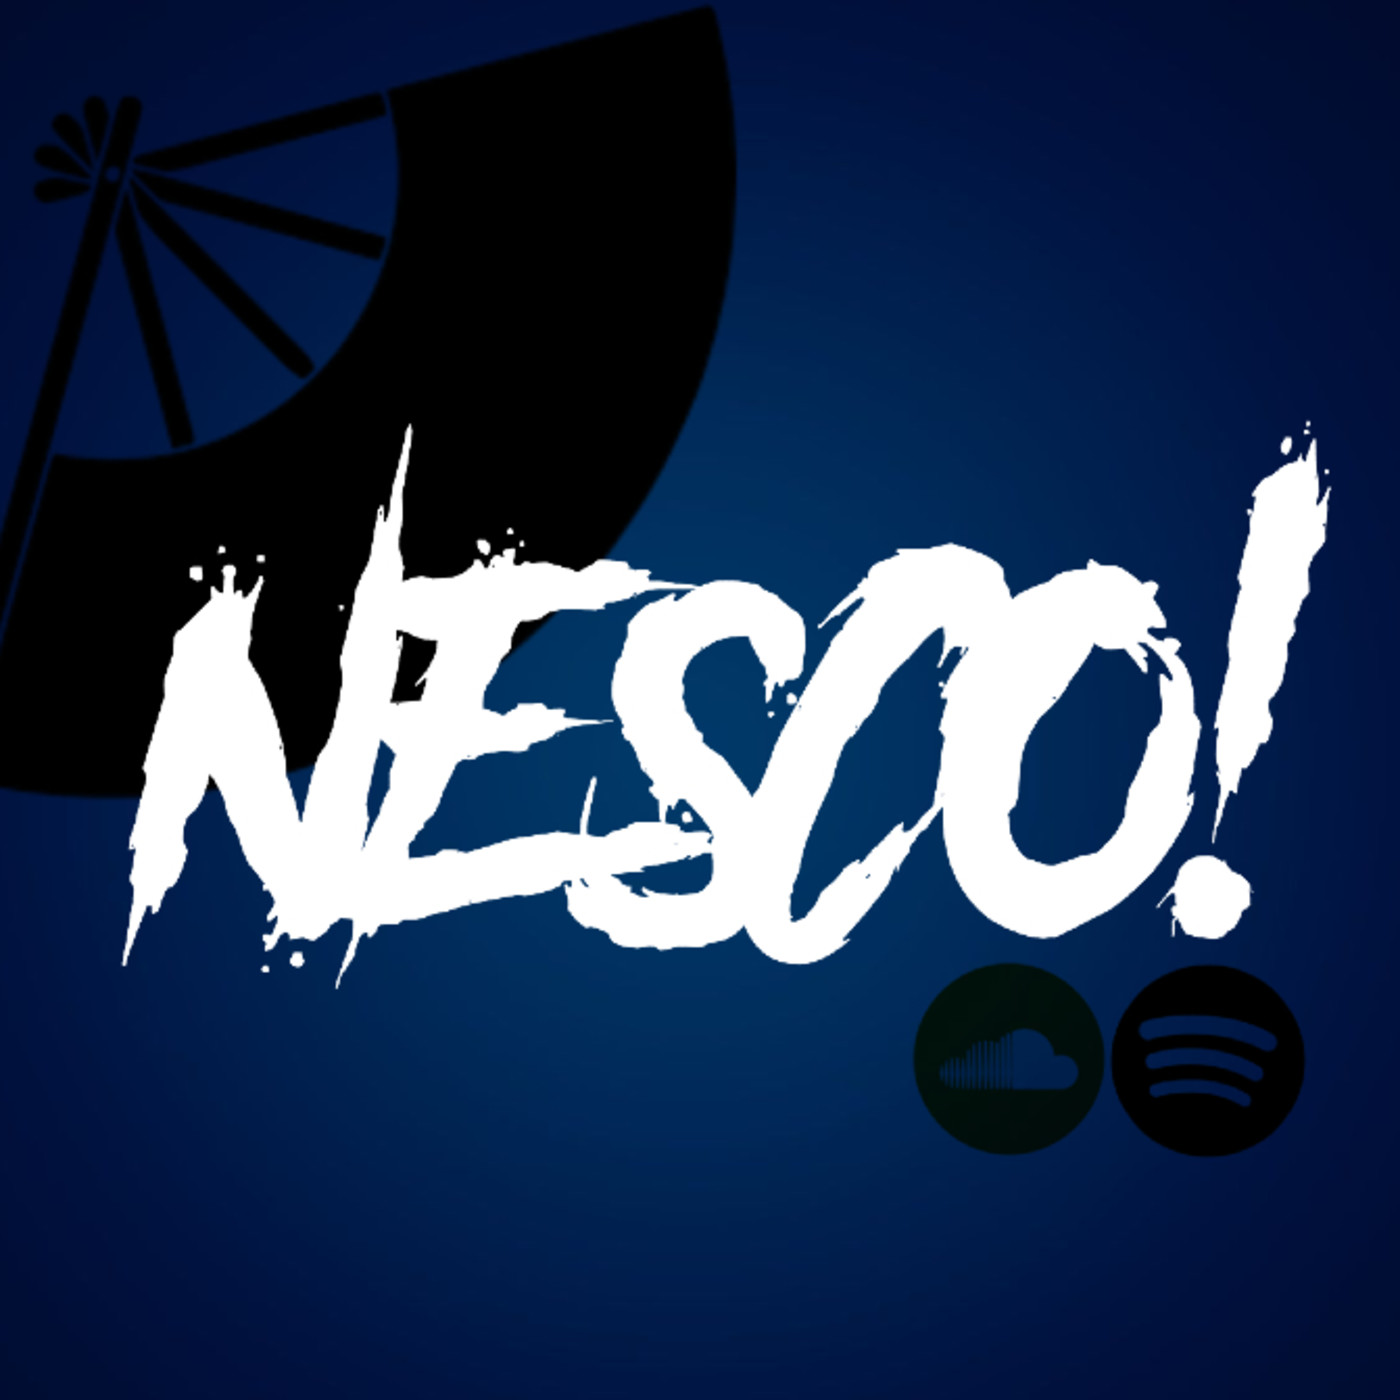 Nesco - Pump It 